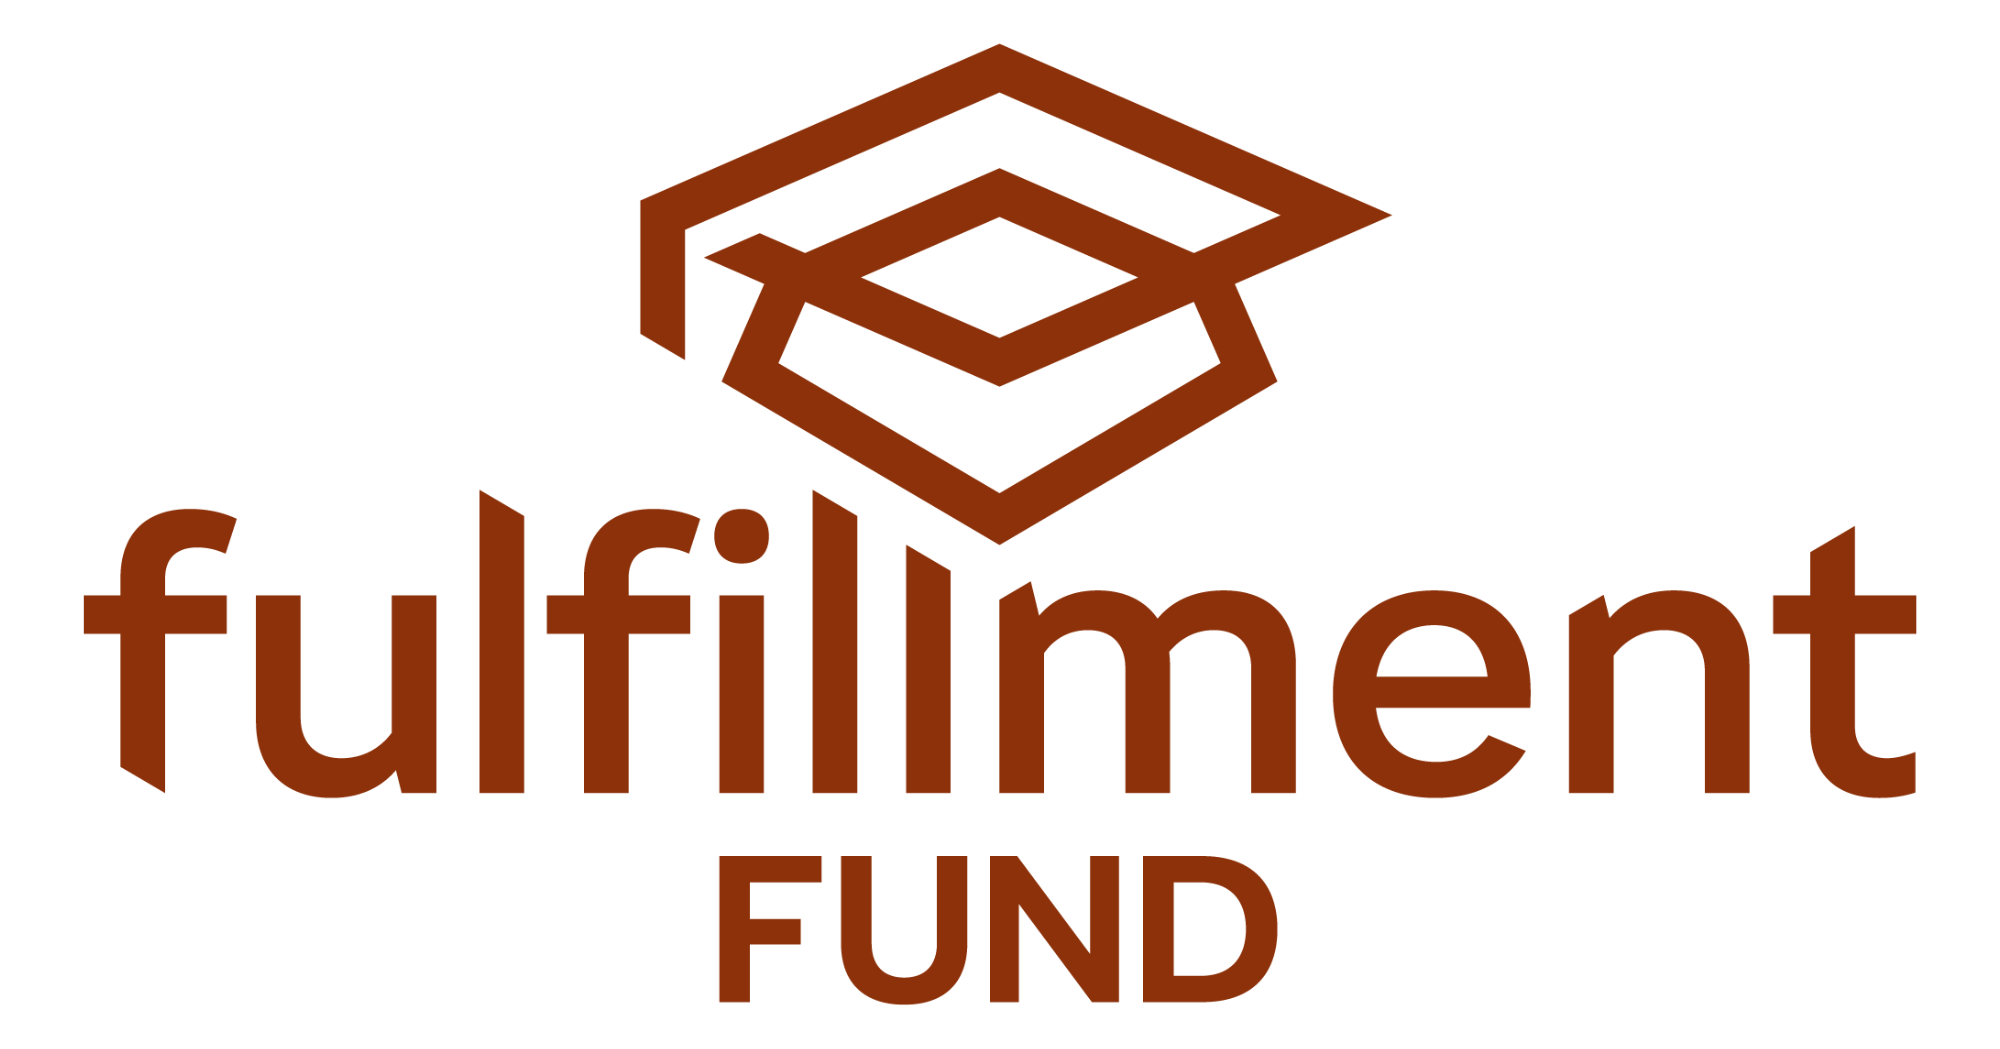 Fulfillment Fund